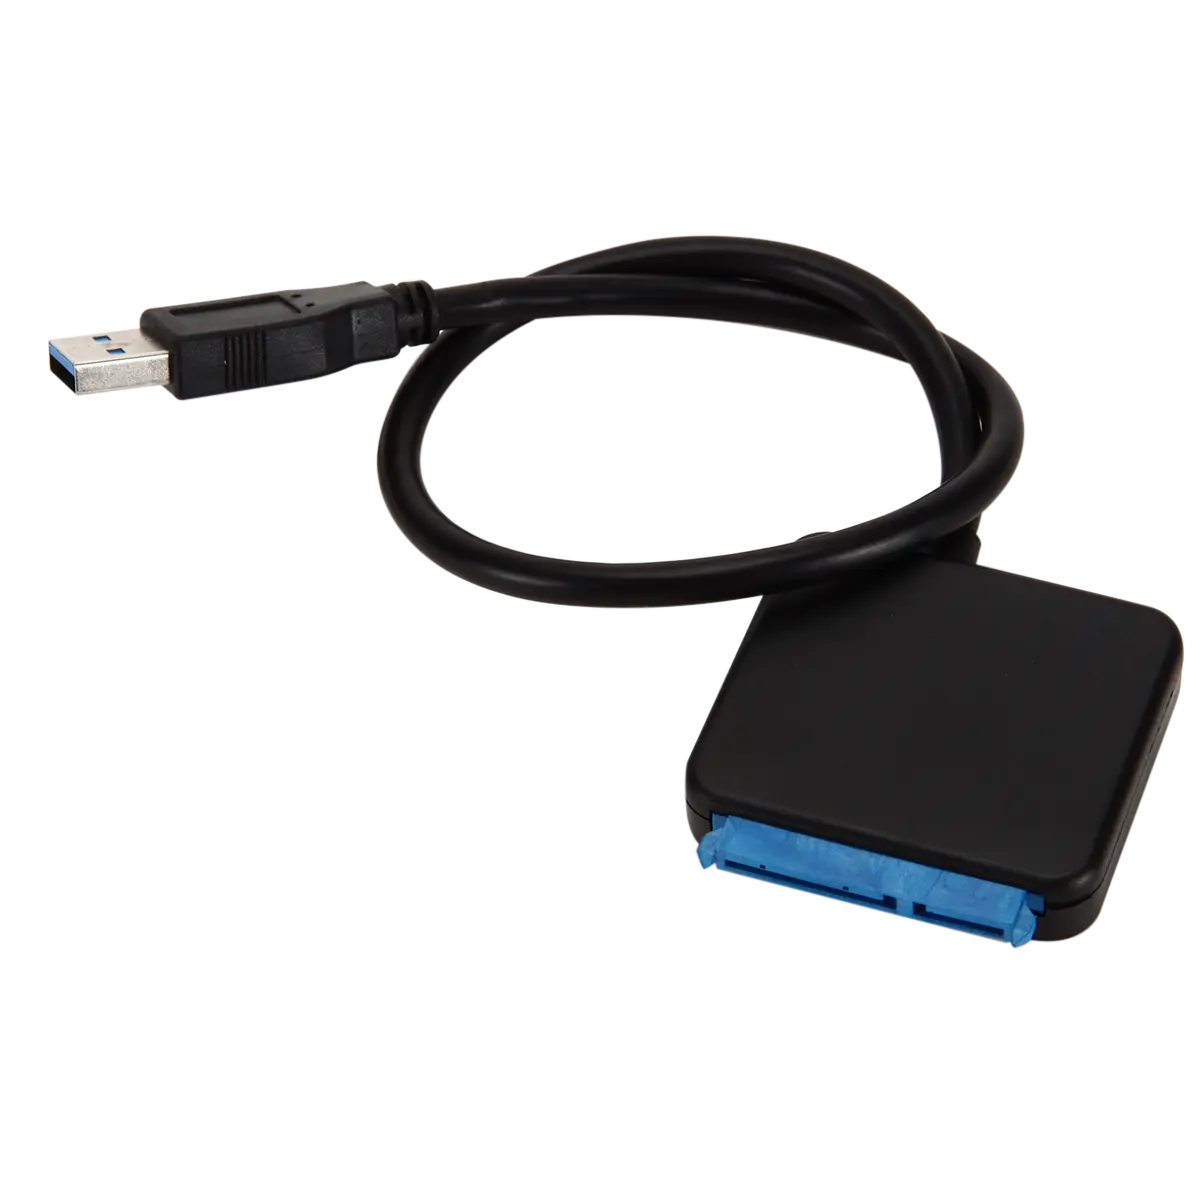 Kabel Konverter Adaptor USB 3.0 Ke Sata 22pin SataIII Ke USB 3.0 untuk 2.5 "Sata HDD SSD